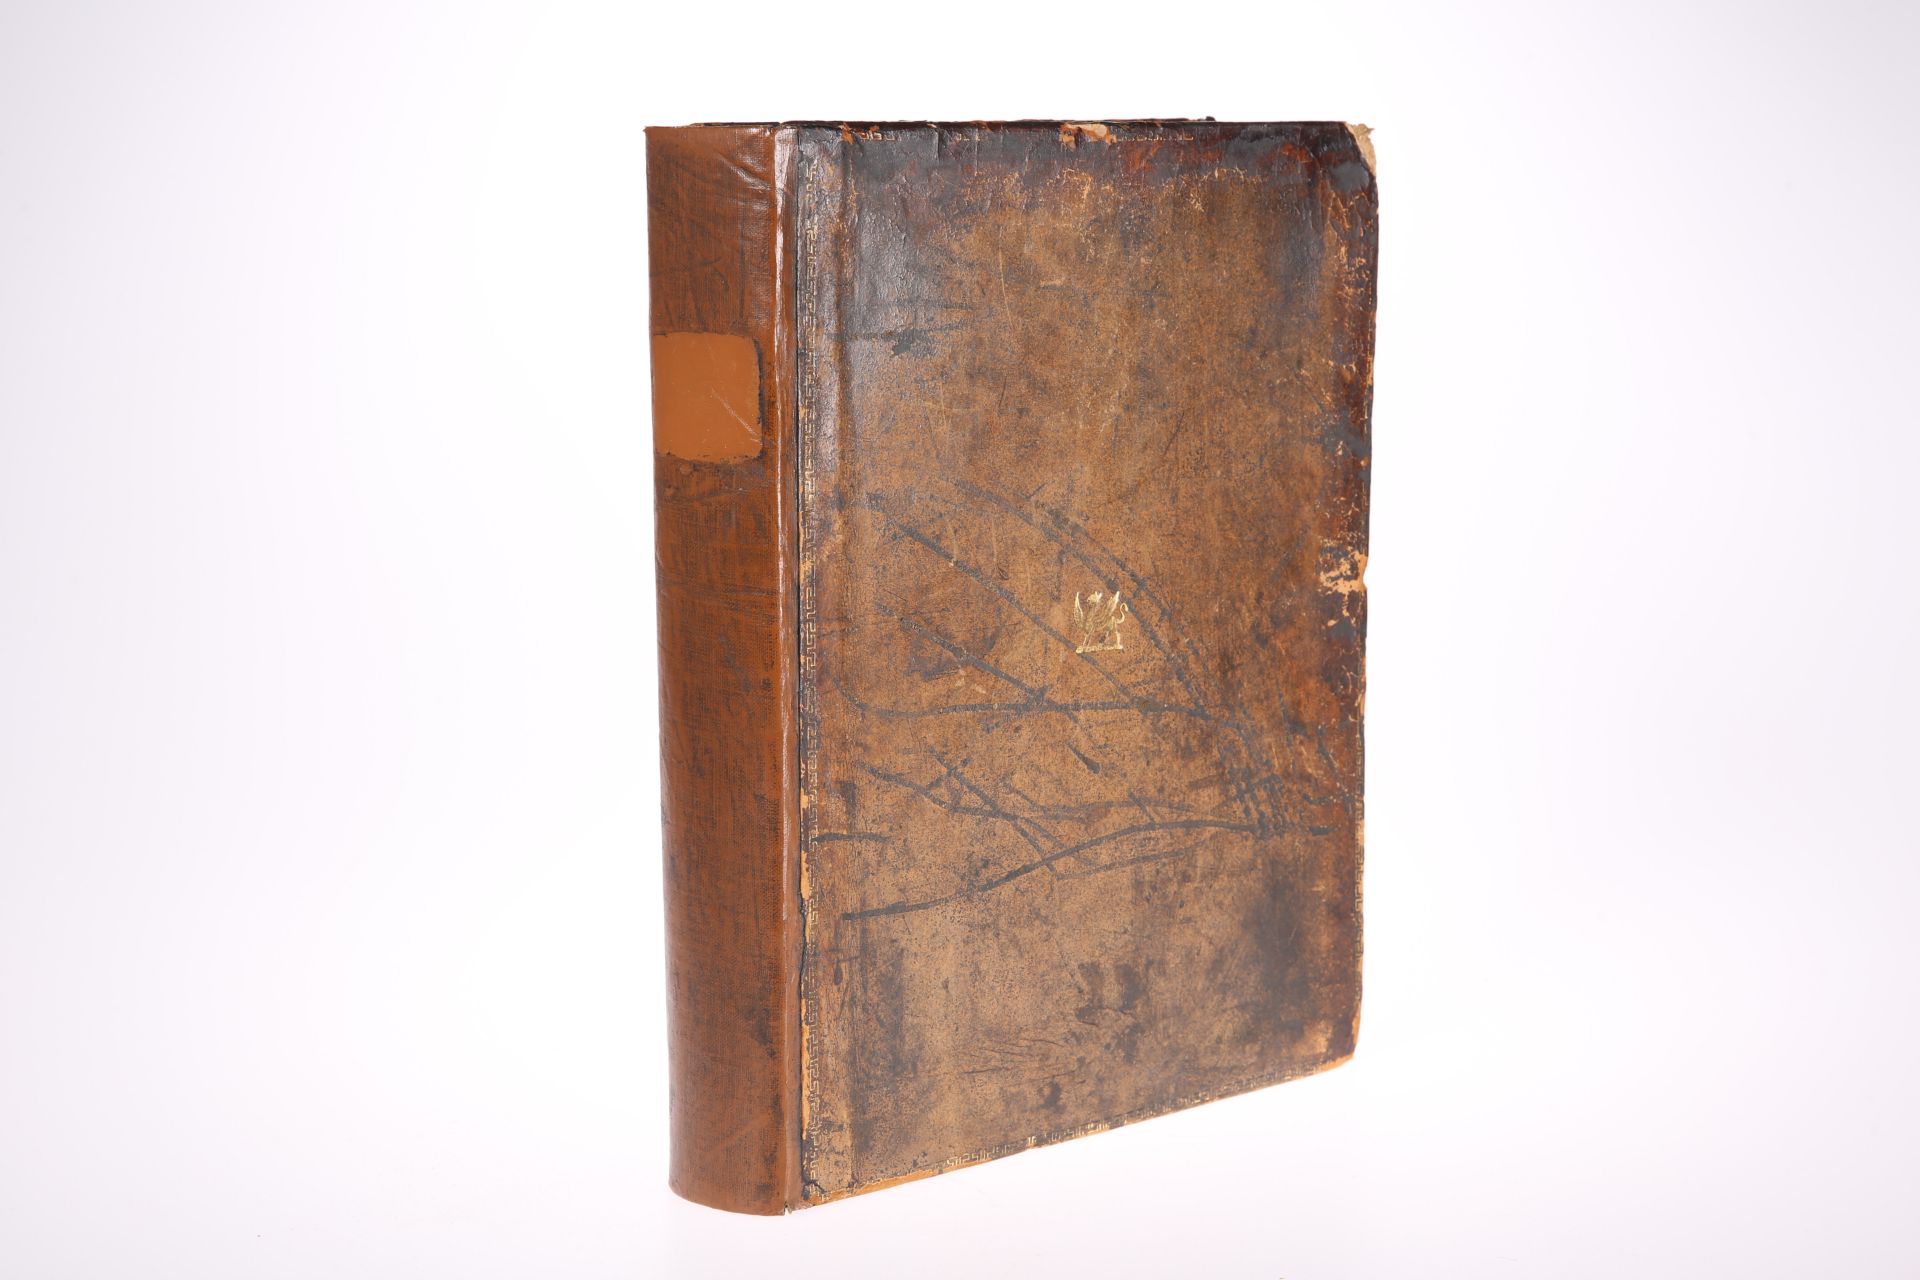 STOCKDALE (JOHN), GEOGRAPHICAL DESCRIPTION OF EMPIRE, 1800.